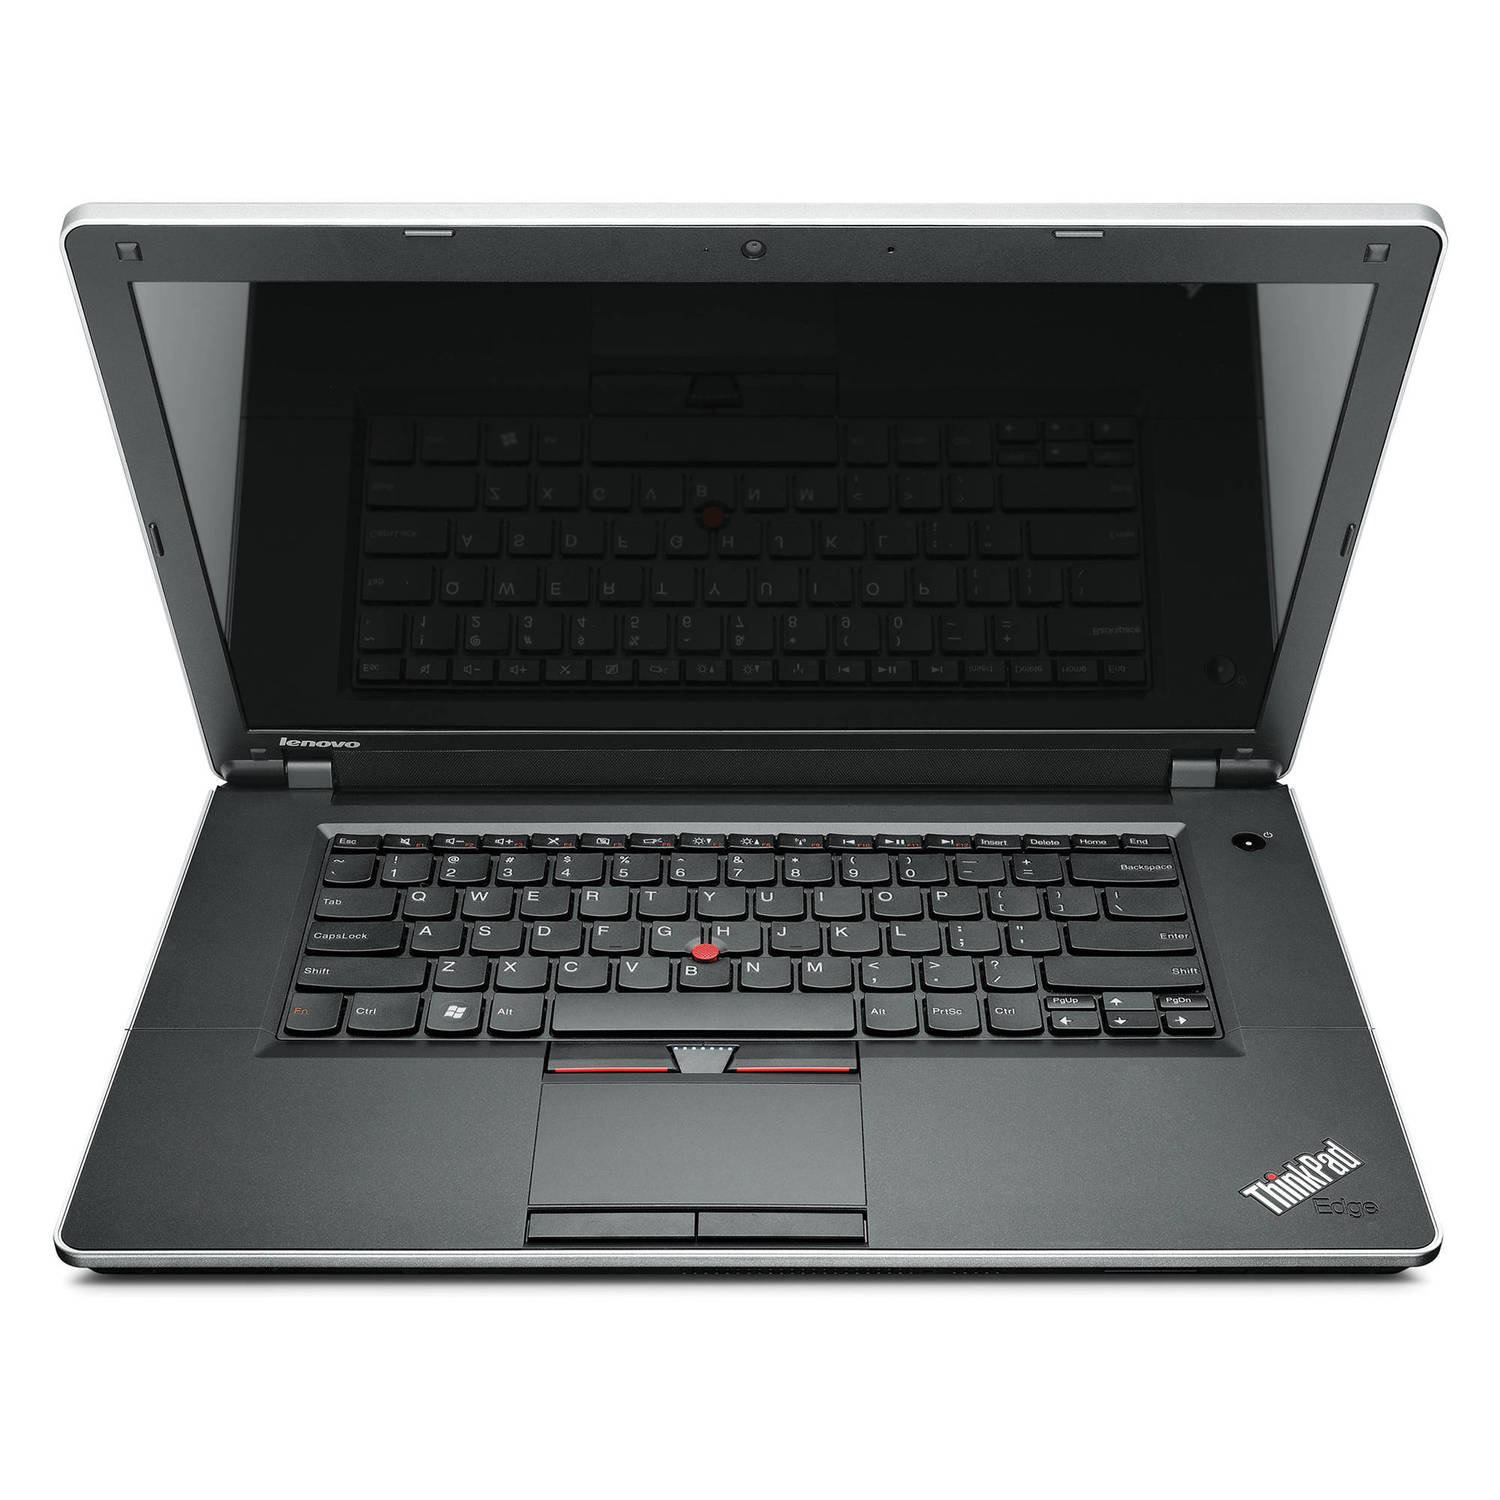 Laptop Lenovo ThinkPad Edge 15, Intel Core i3-370M 2.40GHz, 4GB DDR3, 320GB SATA, DVD-RW, 15.6 Inch